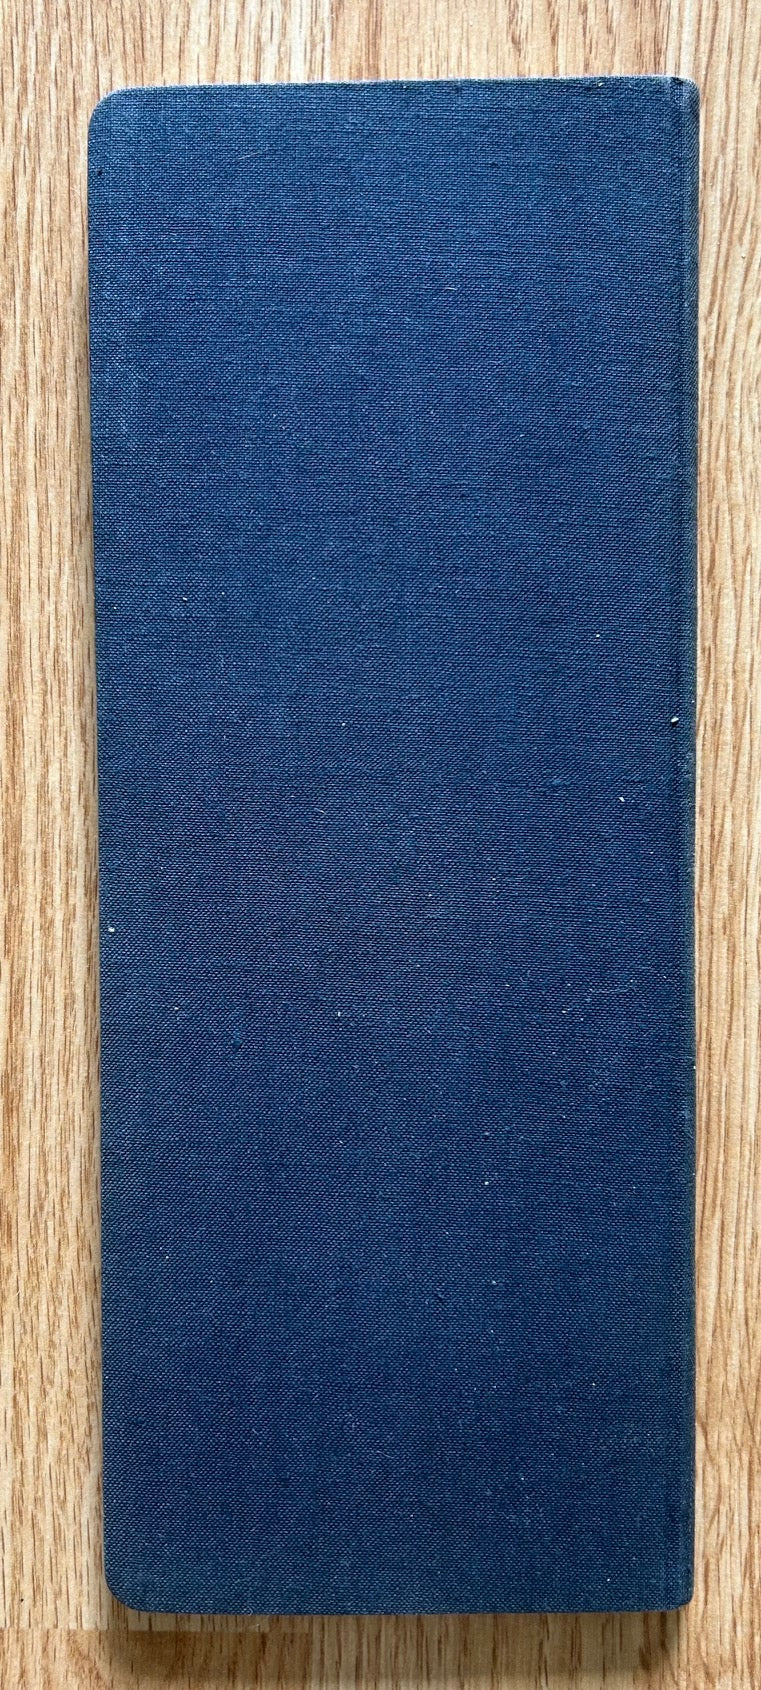 War Merit Cross 1st Class with Swords hardcover booklet